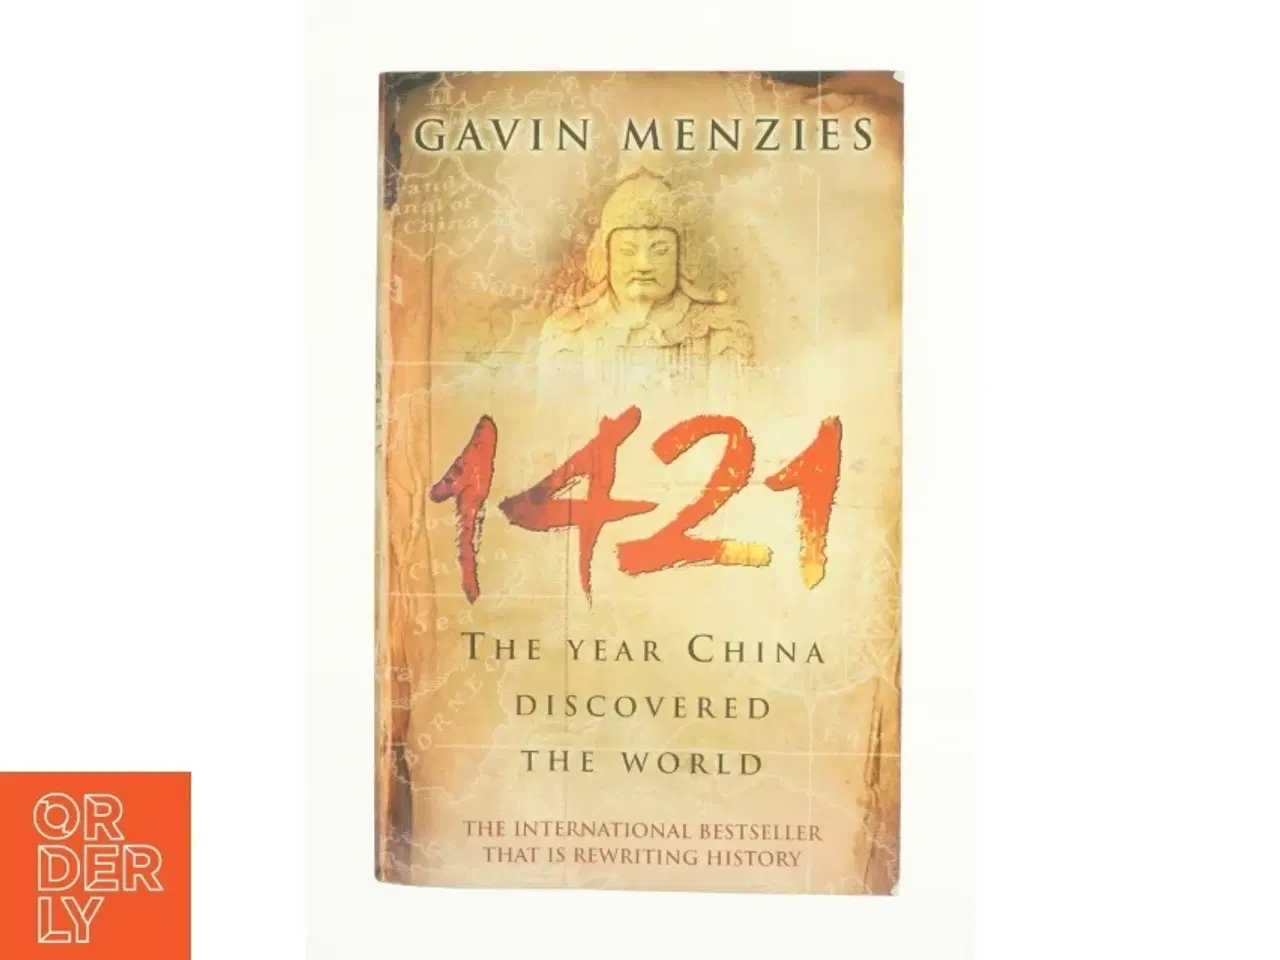 Billede 1 - 1421: the Year China Discovered the World af Gavin Menzies (Bog)